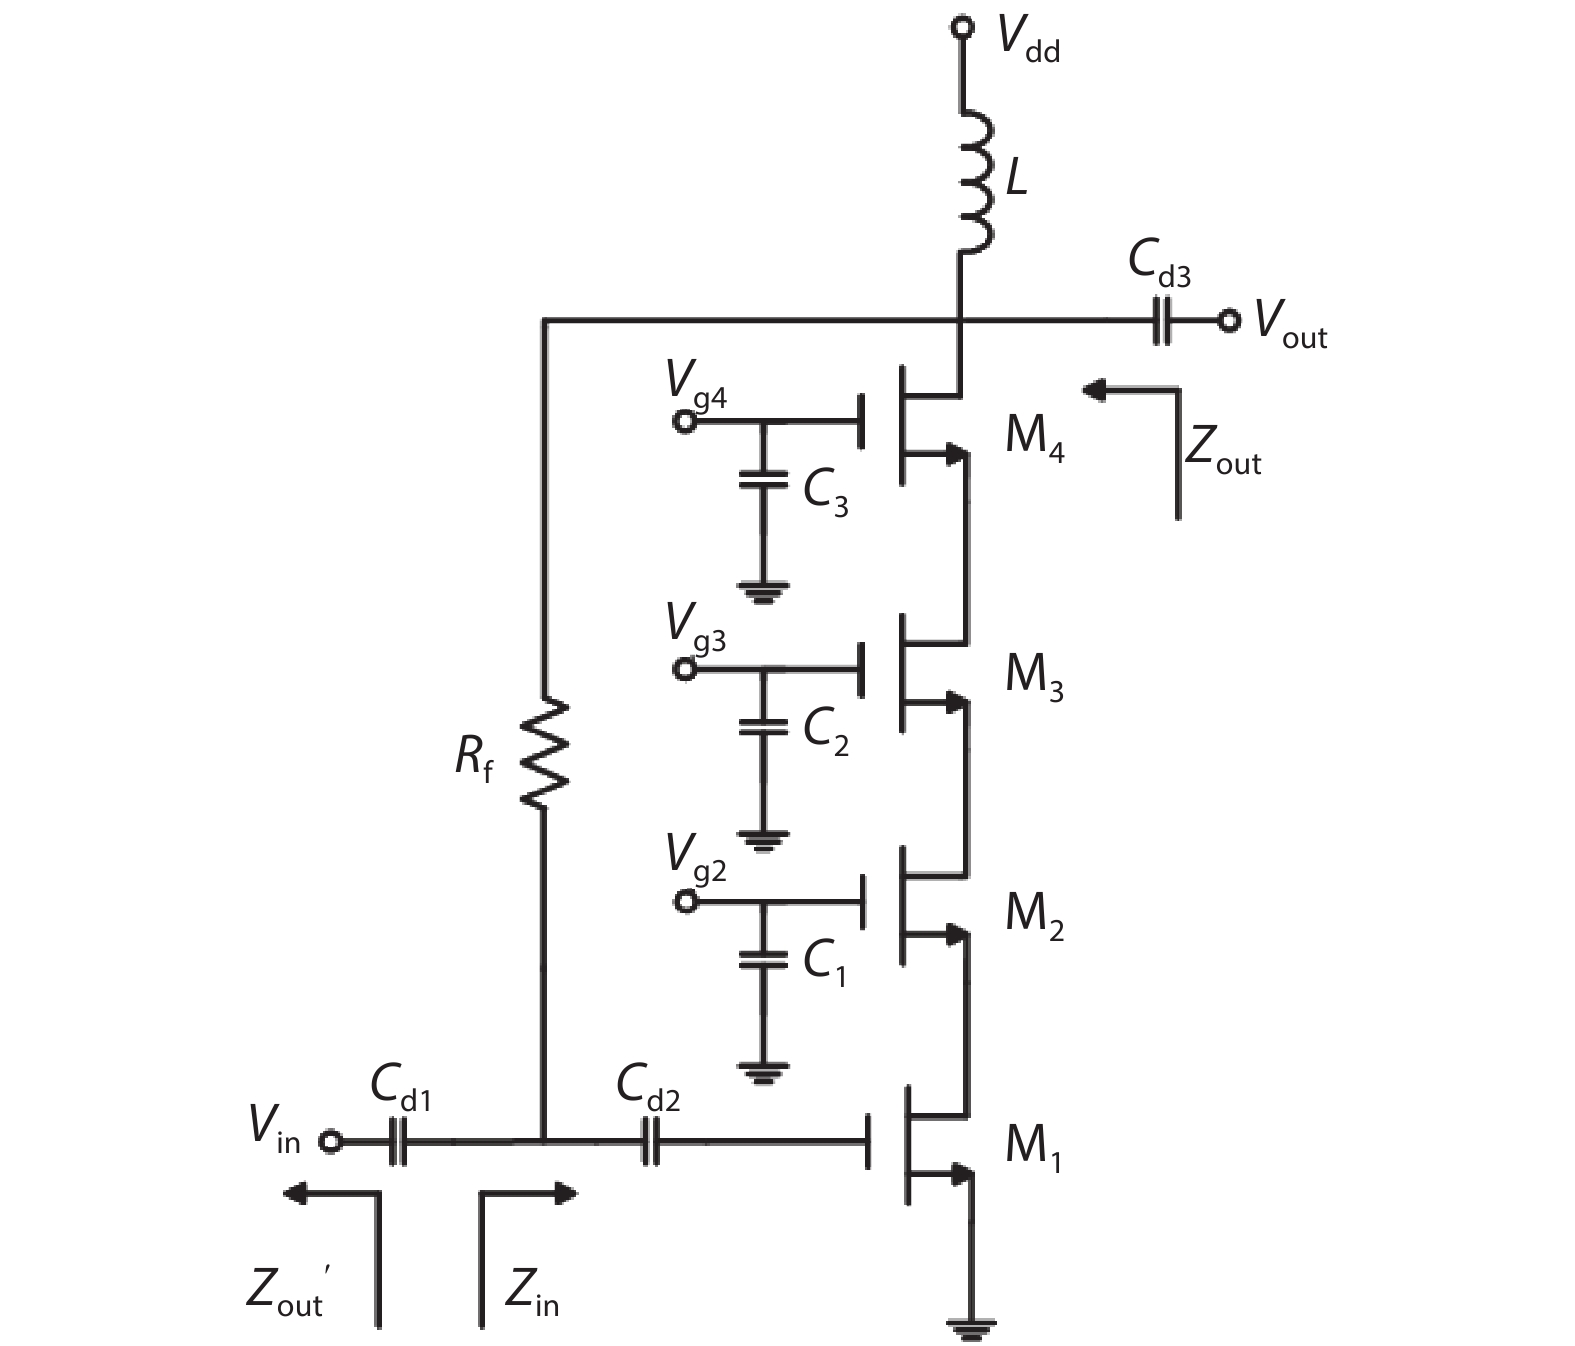 The equivalent AC circuit.